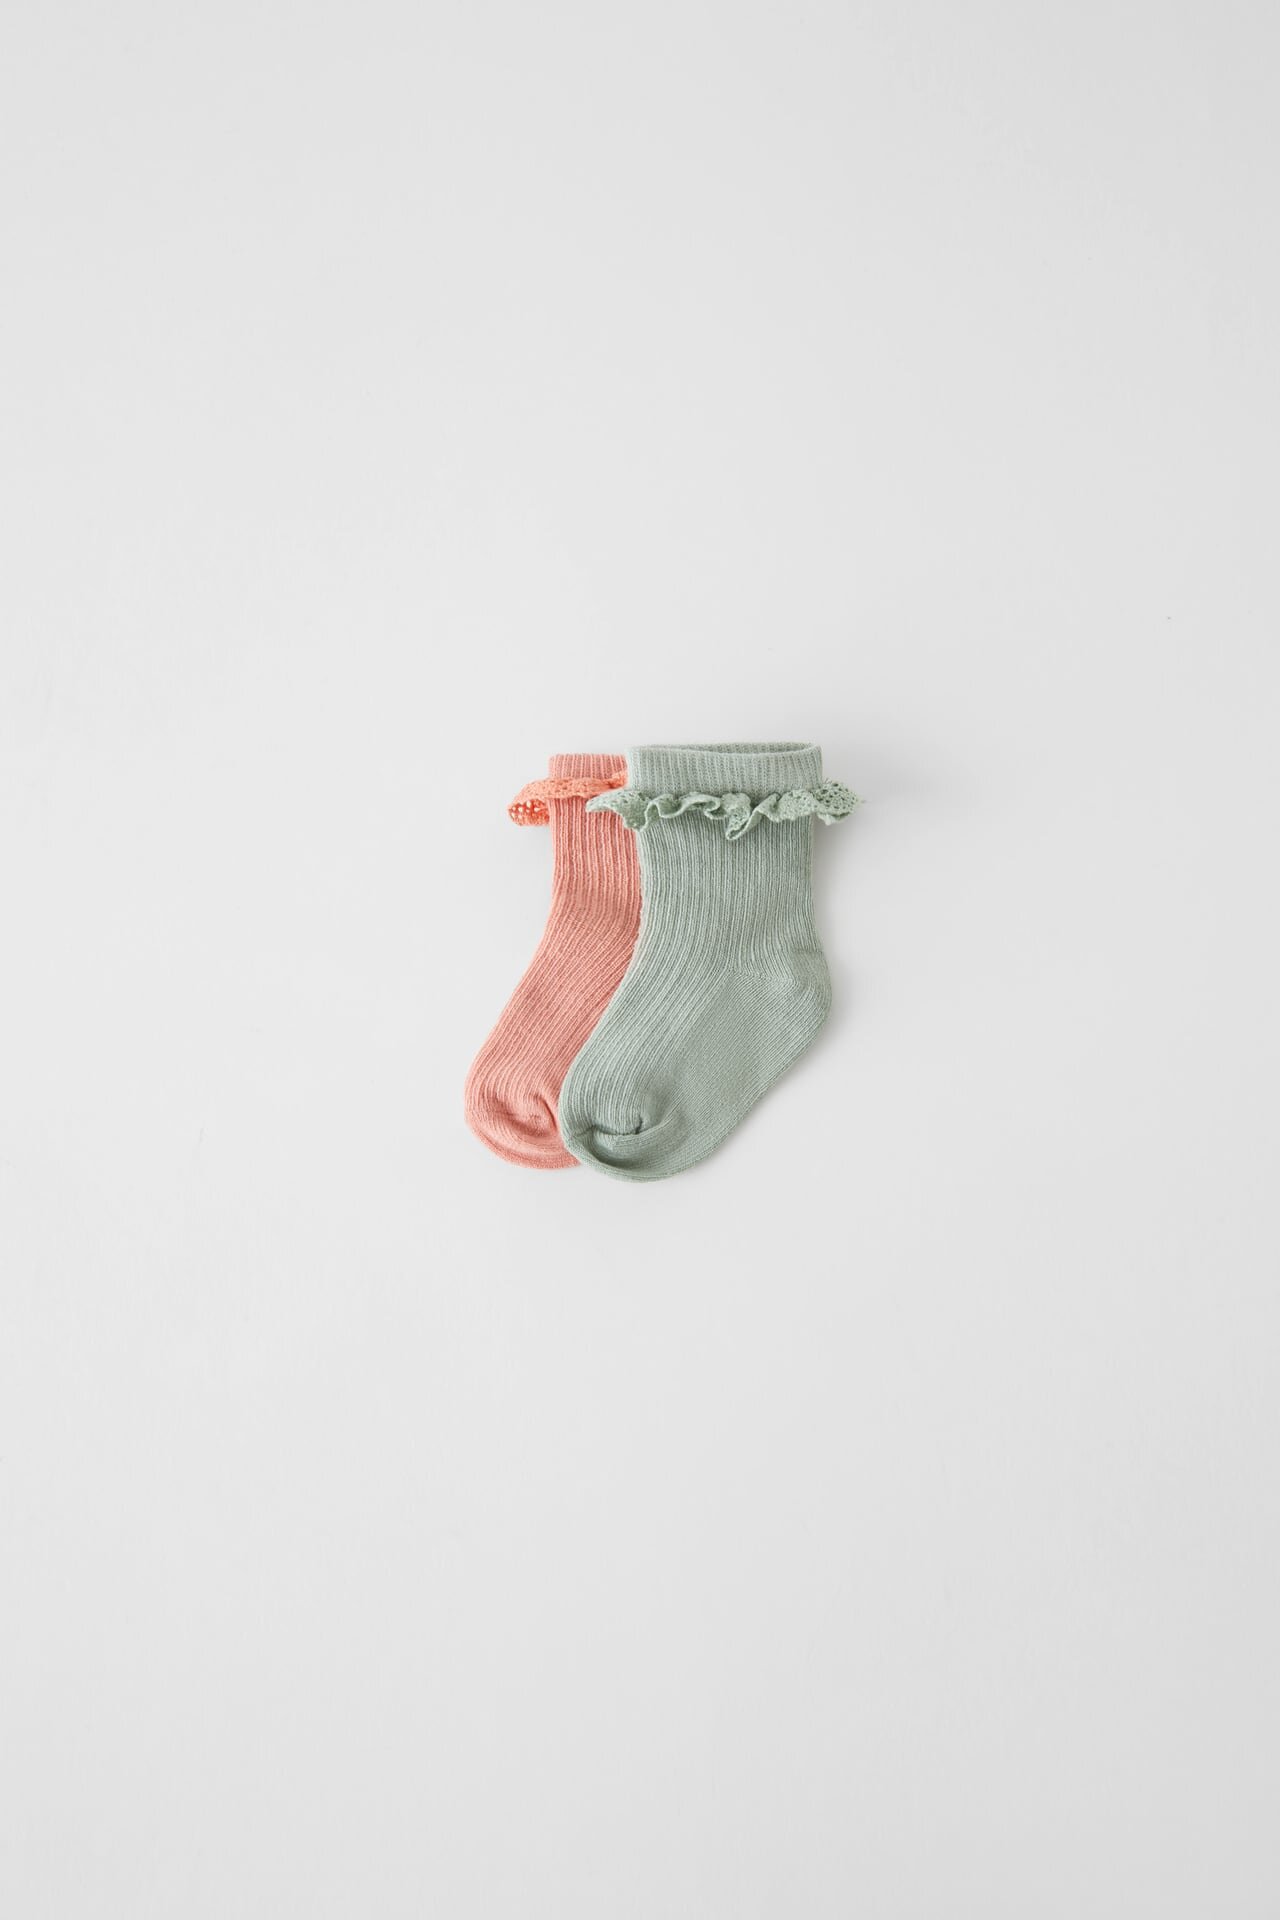 $8 | Lace Socks